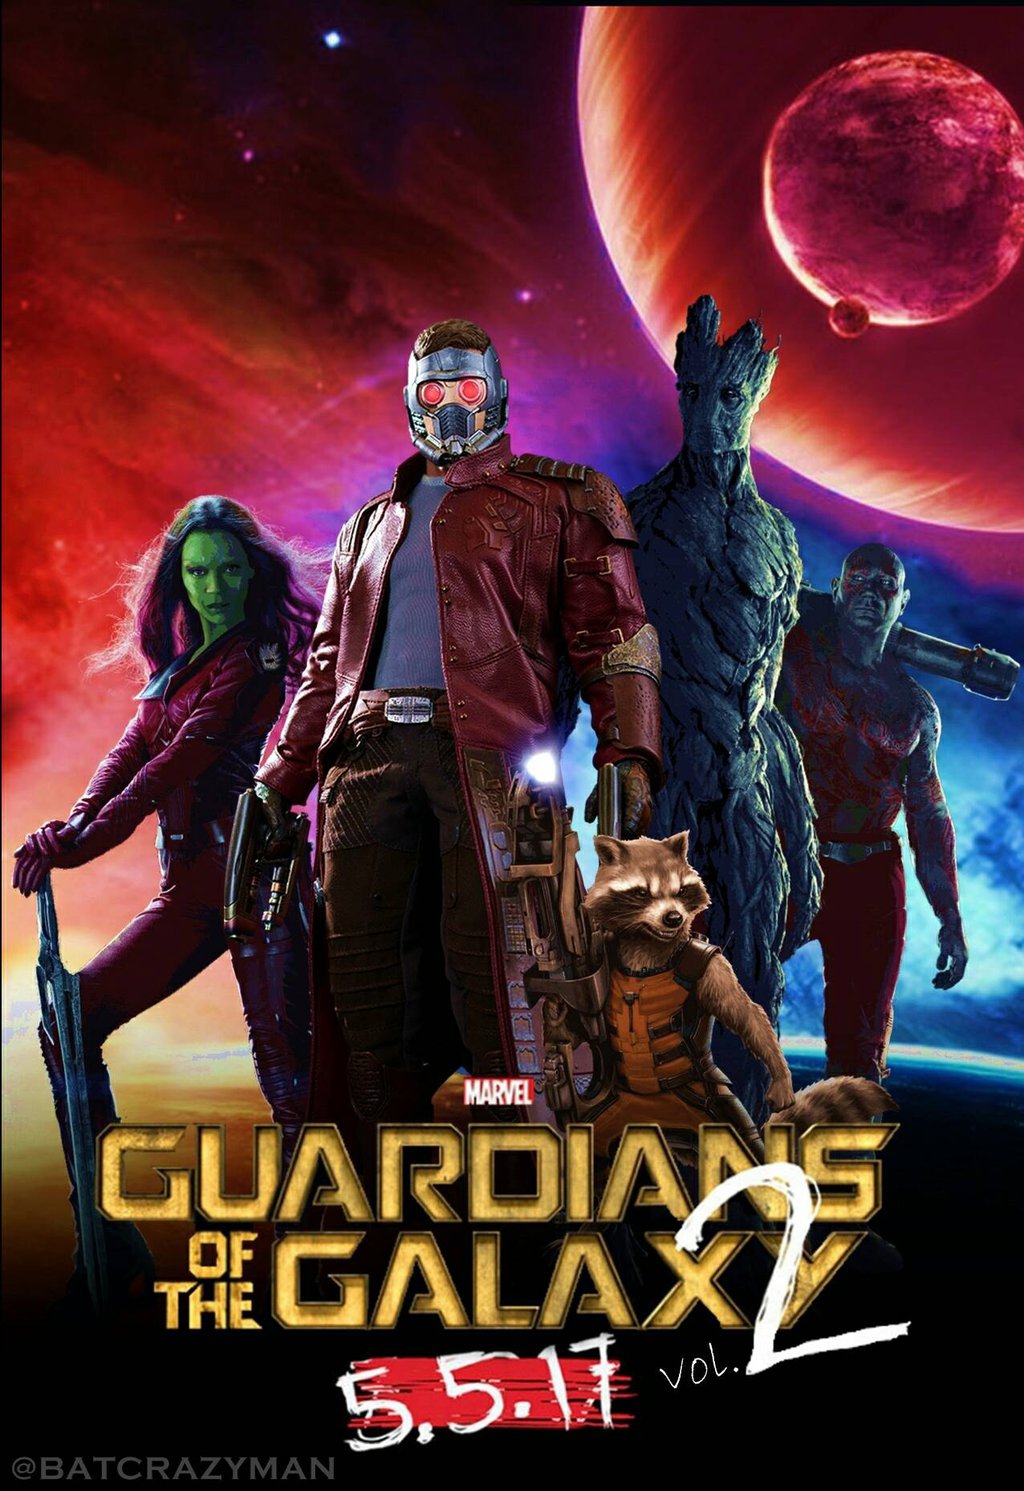 Guardians-of-the-Galaxy-Vol.-2-2017-Full-Movie-Watch-Online-Free.jpg